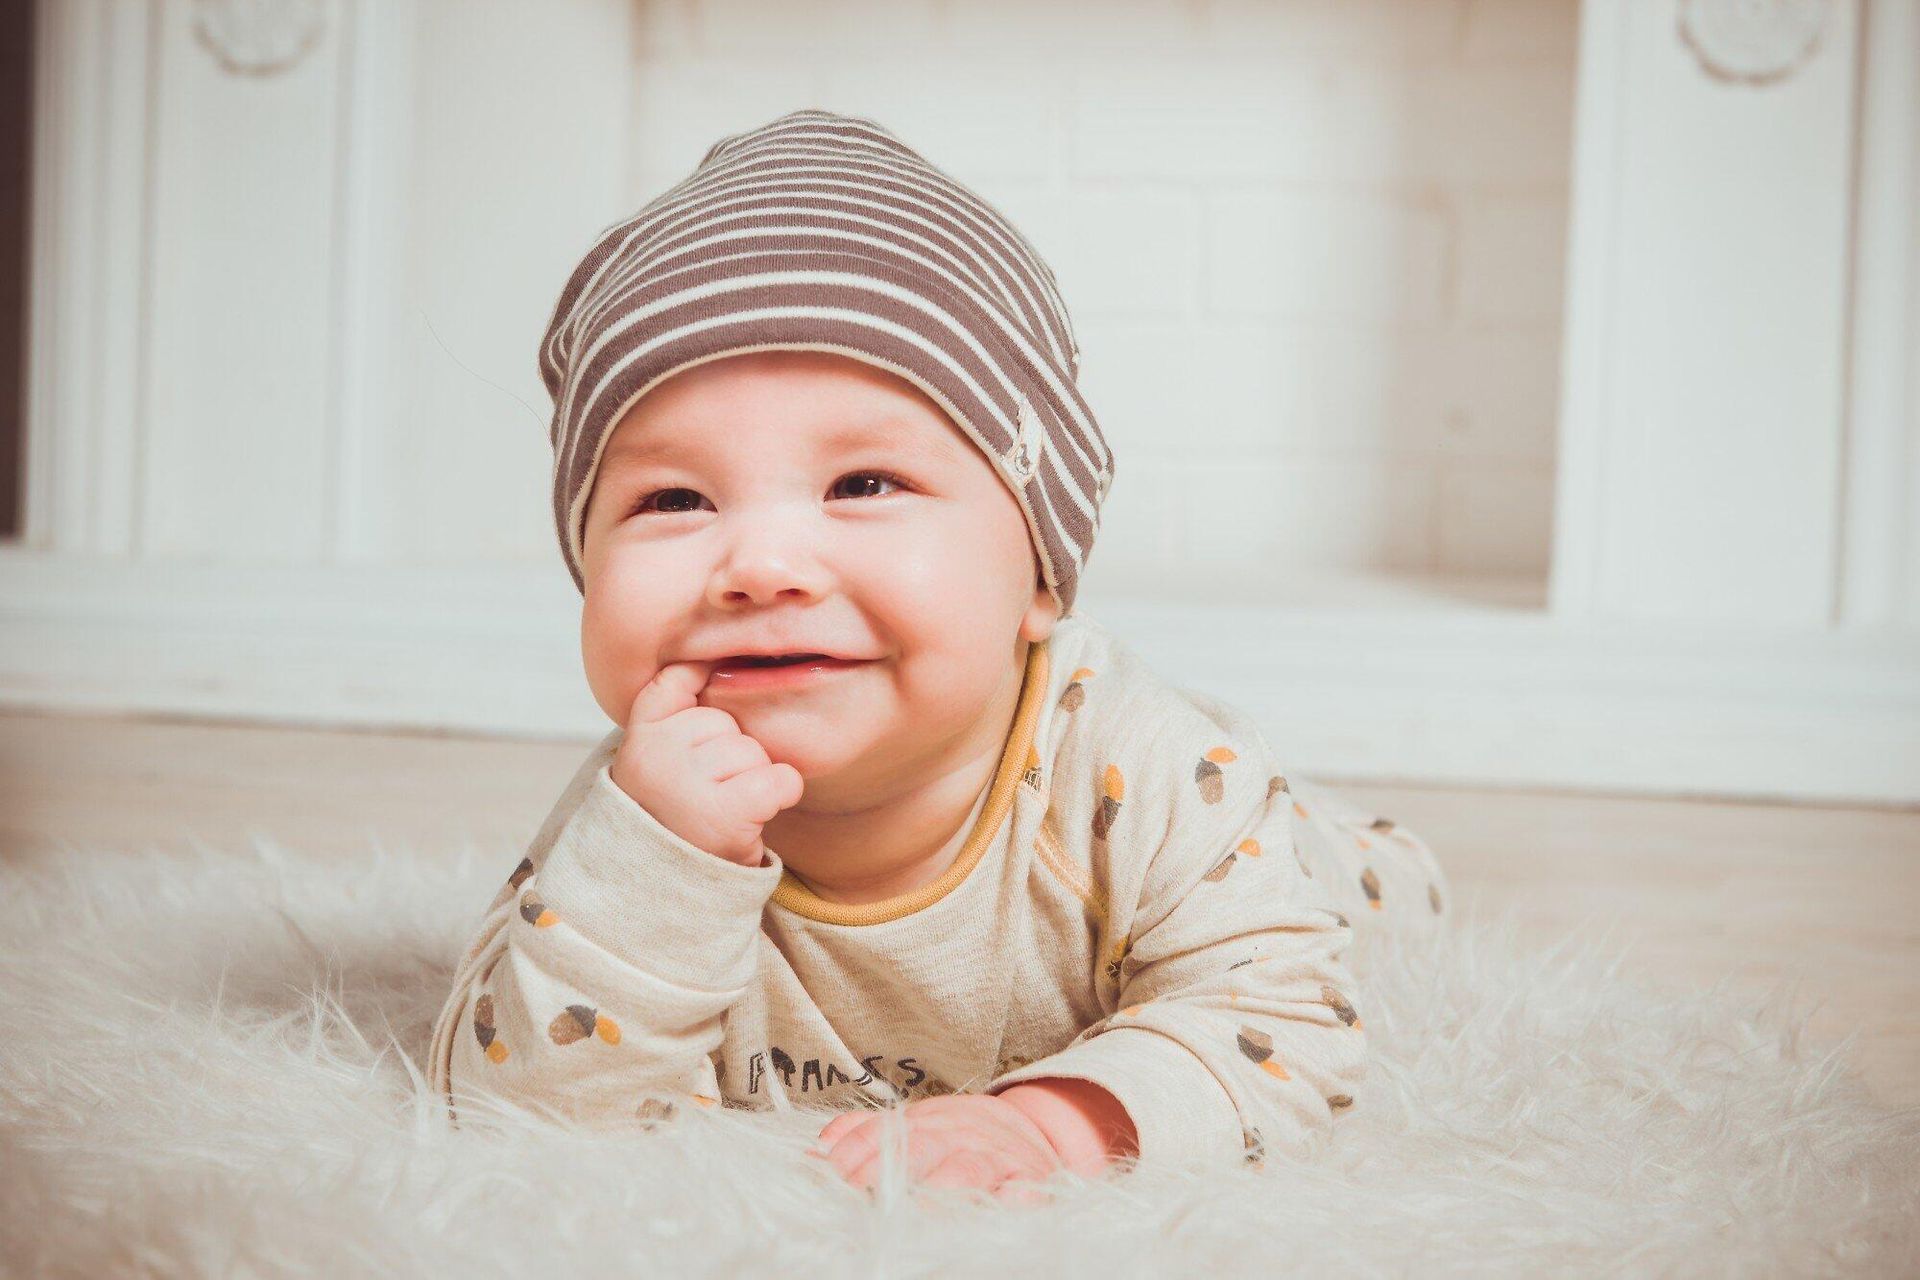 Smiling-infant-happy